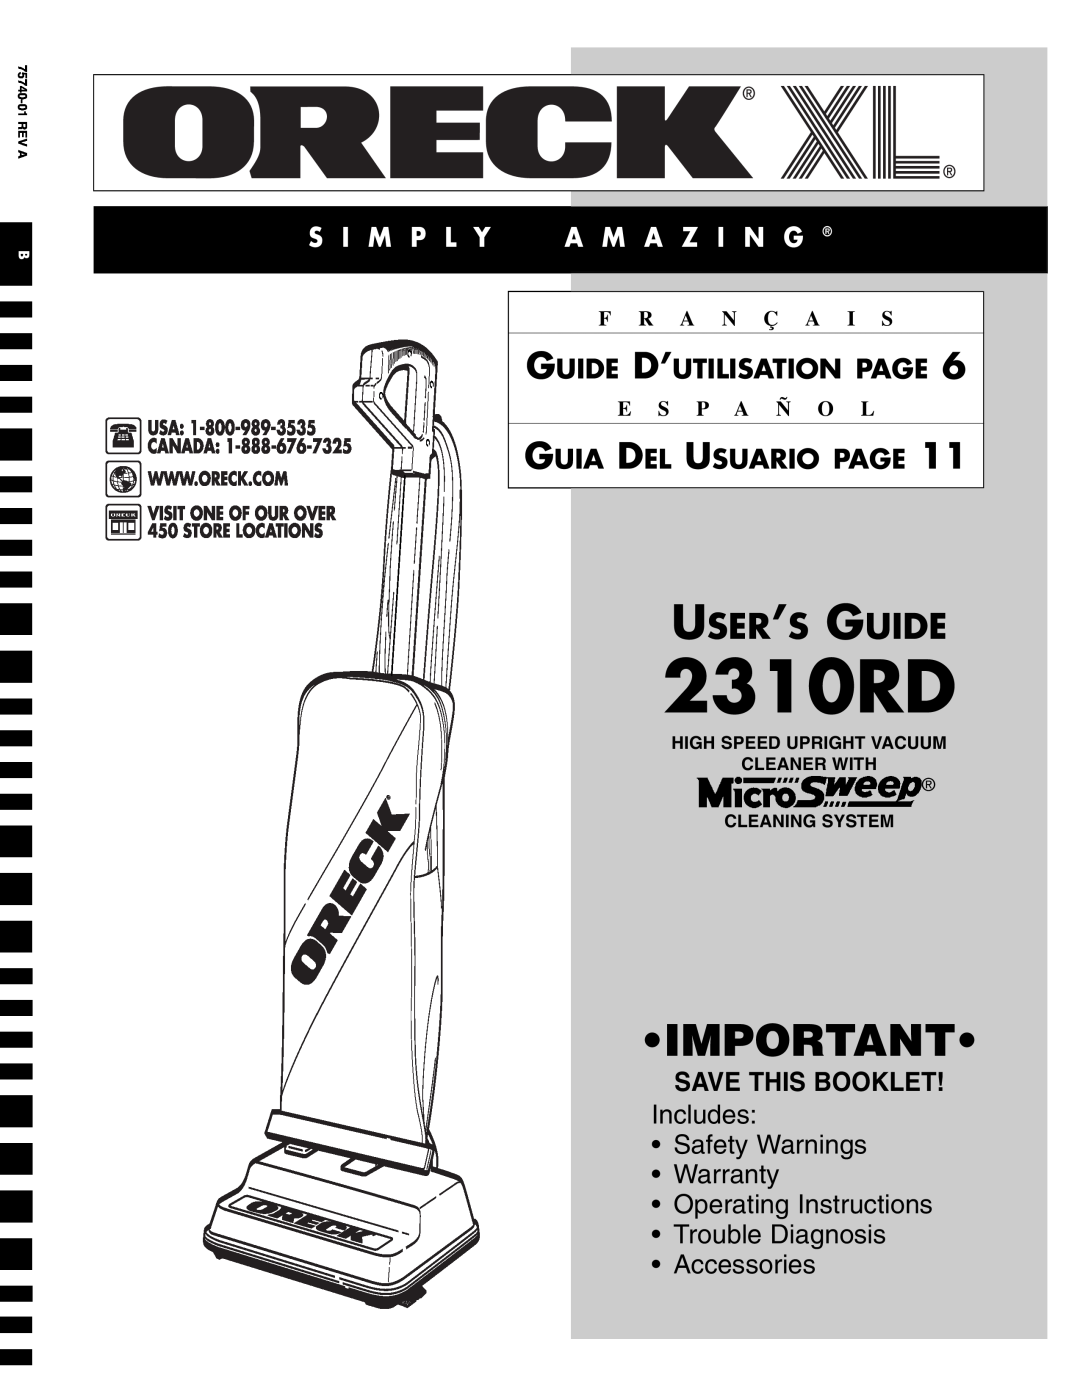 Oreck 2310RD warranty Guide D’Utilisation Page, Guia Del Usuario Page, F R A N Ç A I S, E S P A Ñ O L, User’S Guide 